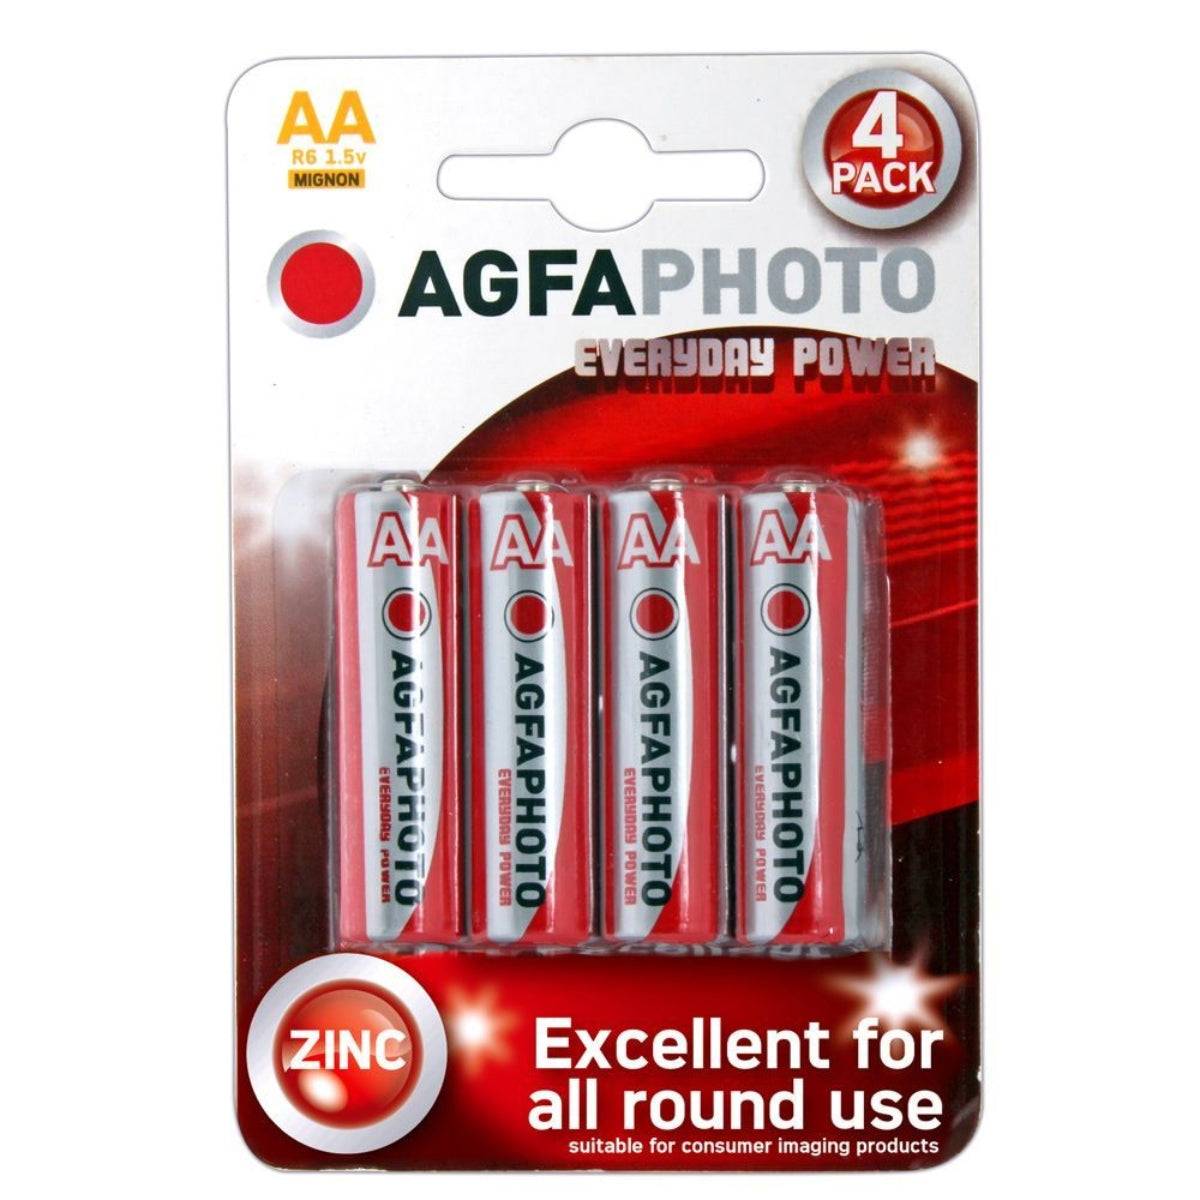 AGFA Photo Everyday Power AA Batteries 4 Pack - Simply Pleasure